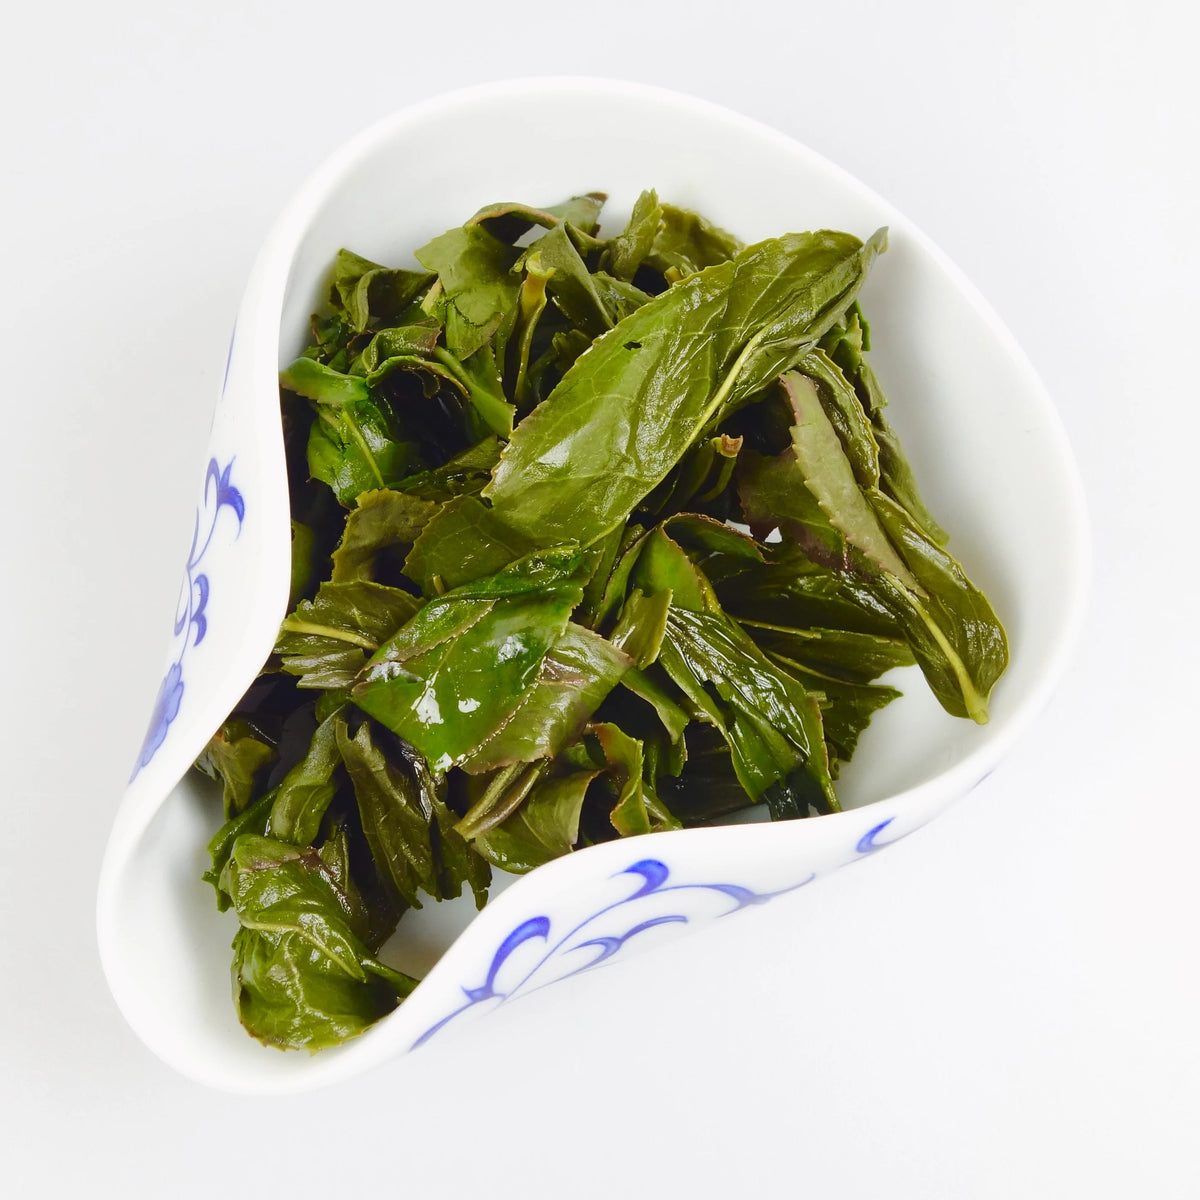 The 5 advantages of loose leaf tea over tea bags